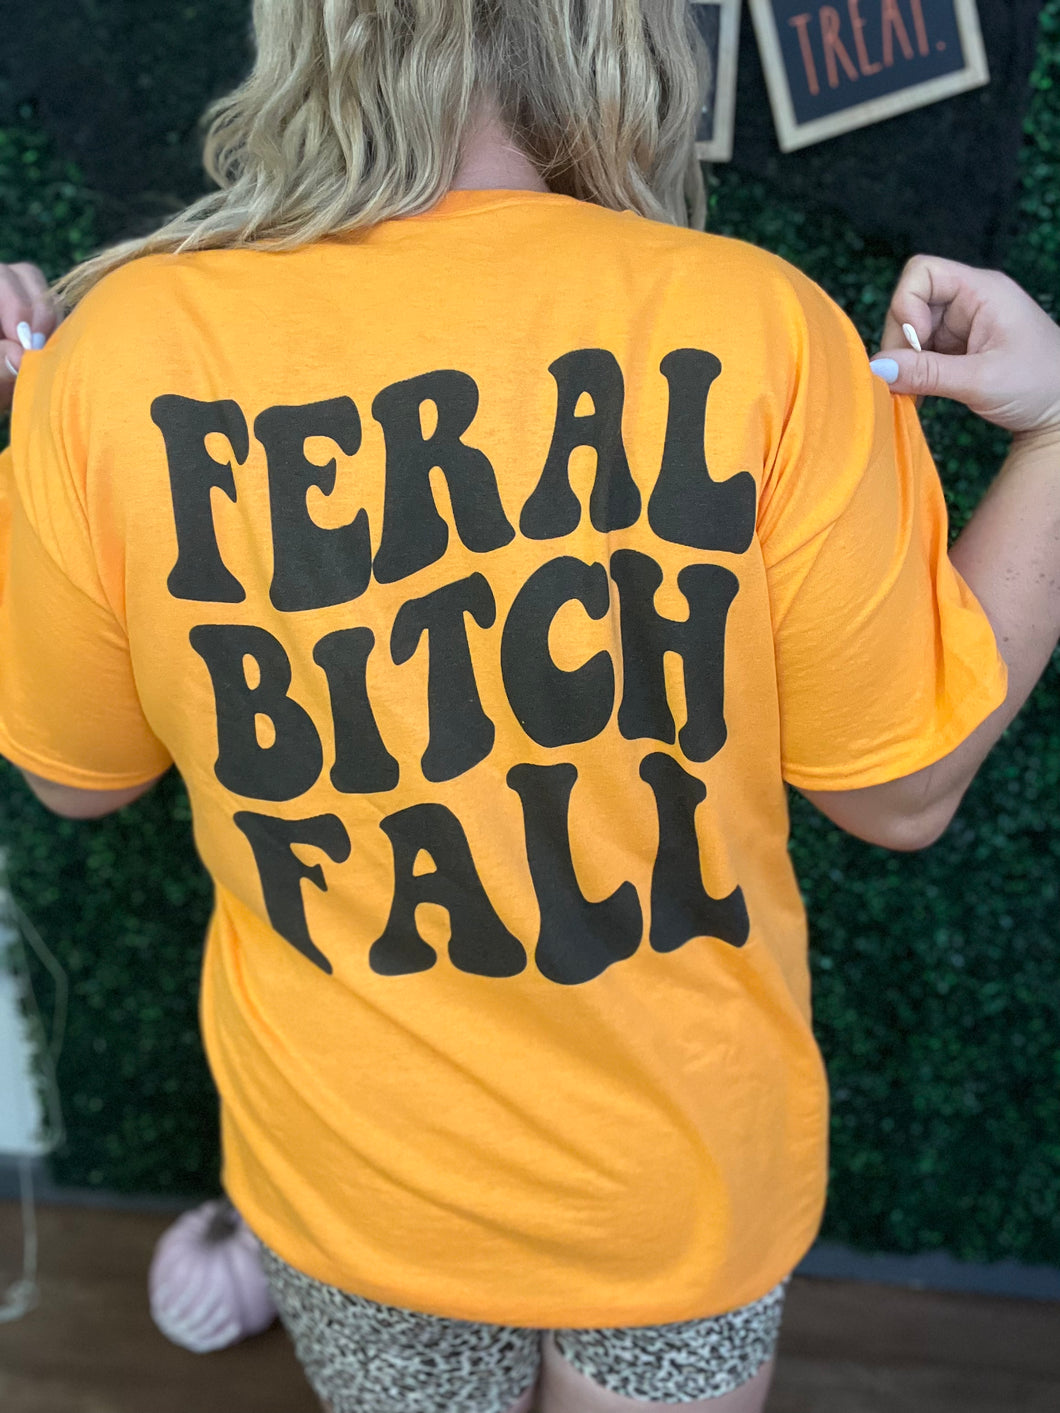 Feral bitch fall tee